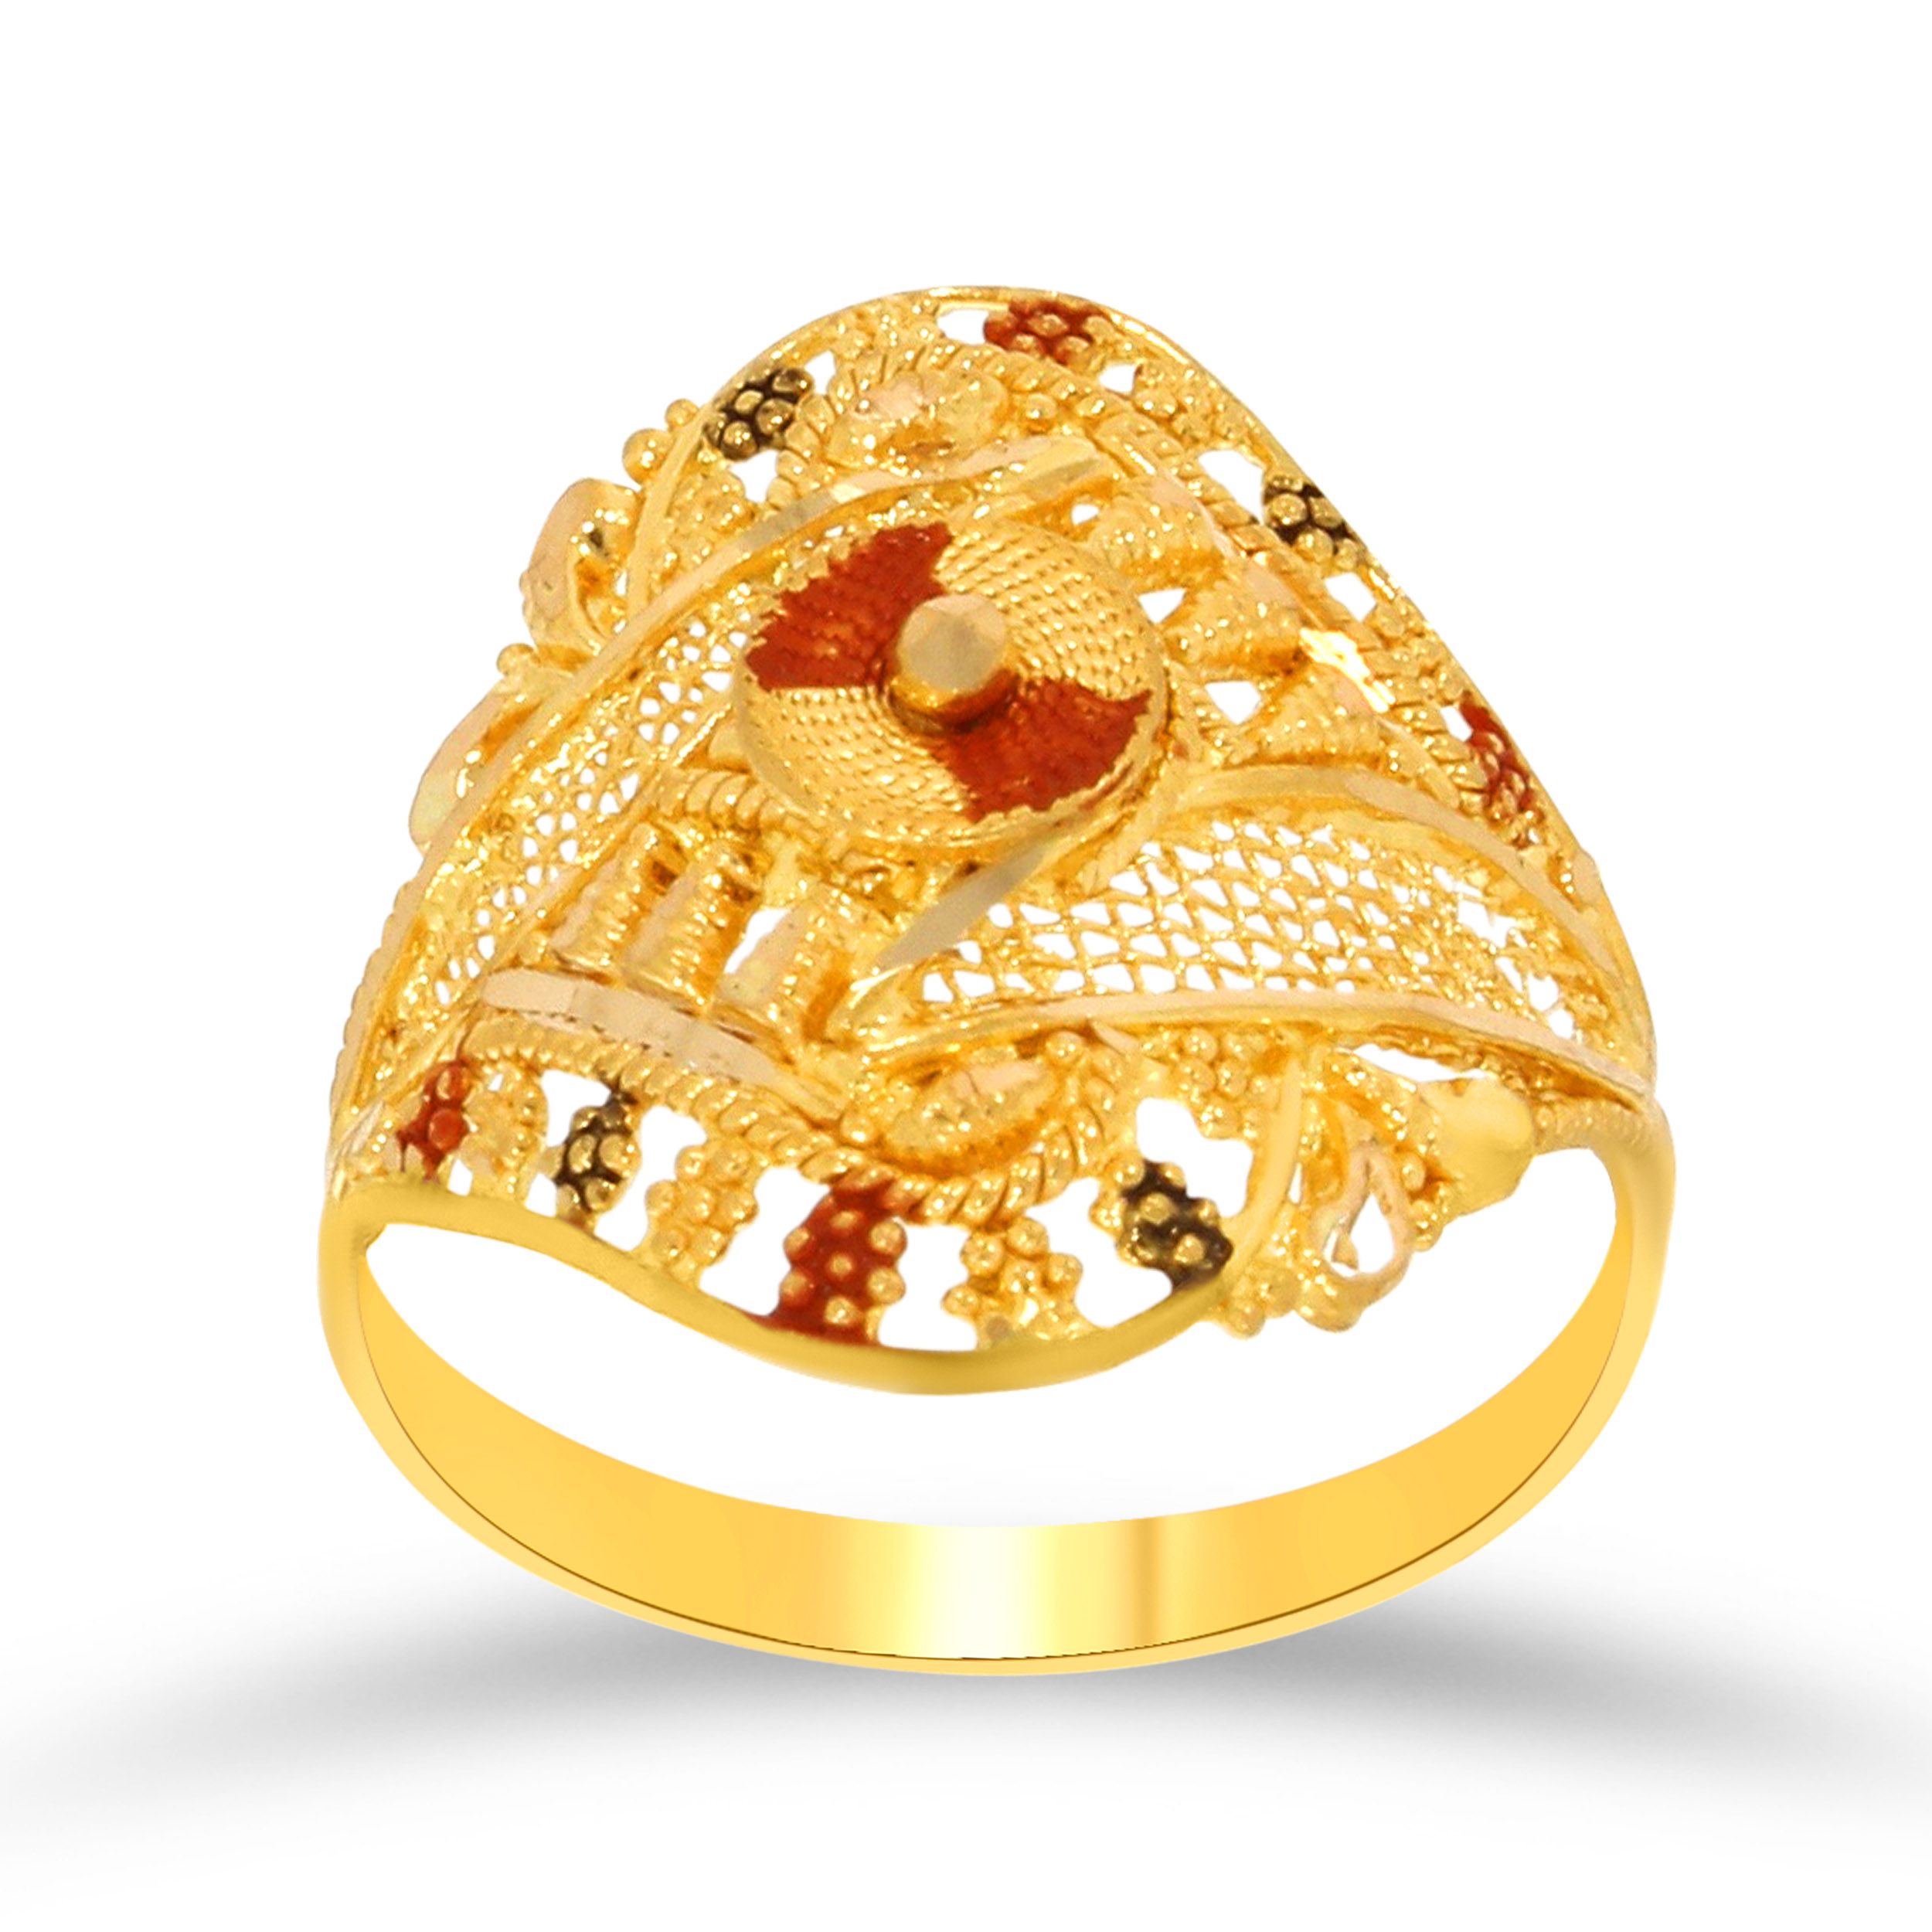 rubina aabi jewels 22ct bis hallmark gold jewelry gold ring -wom